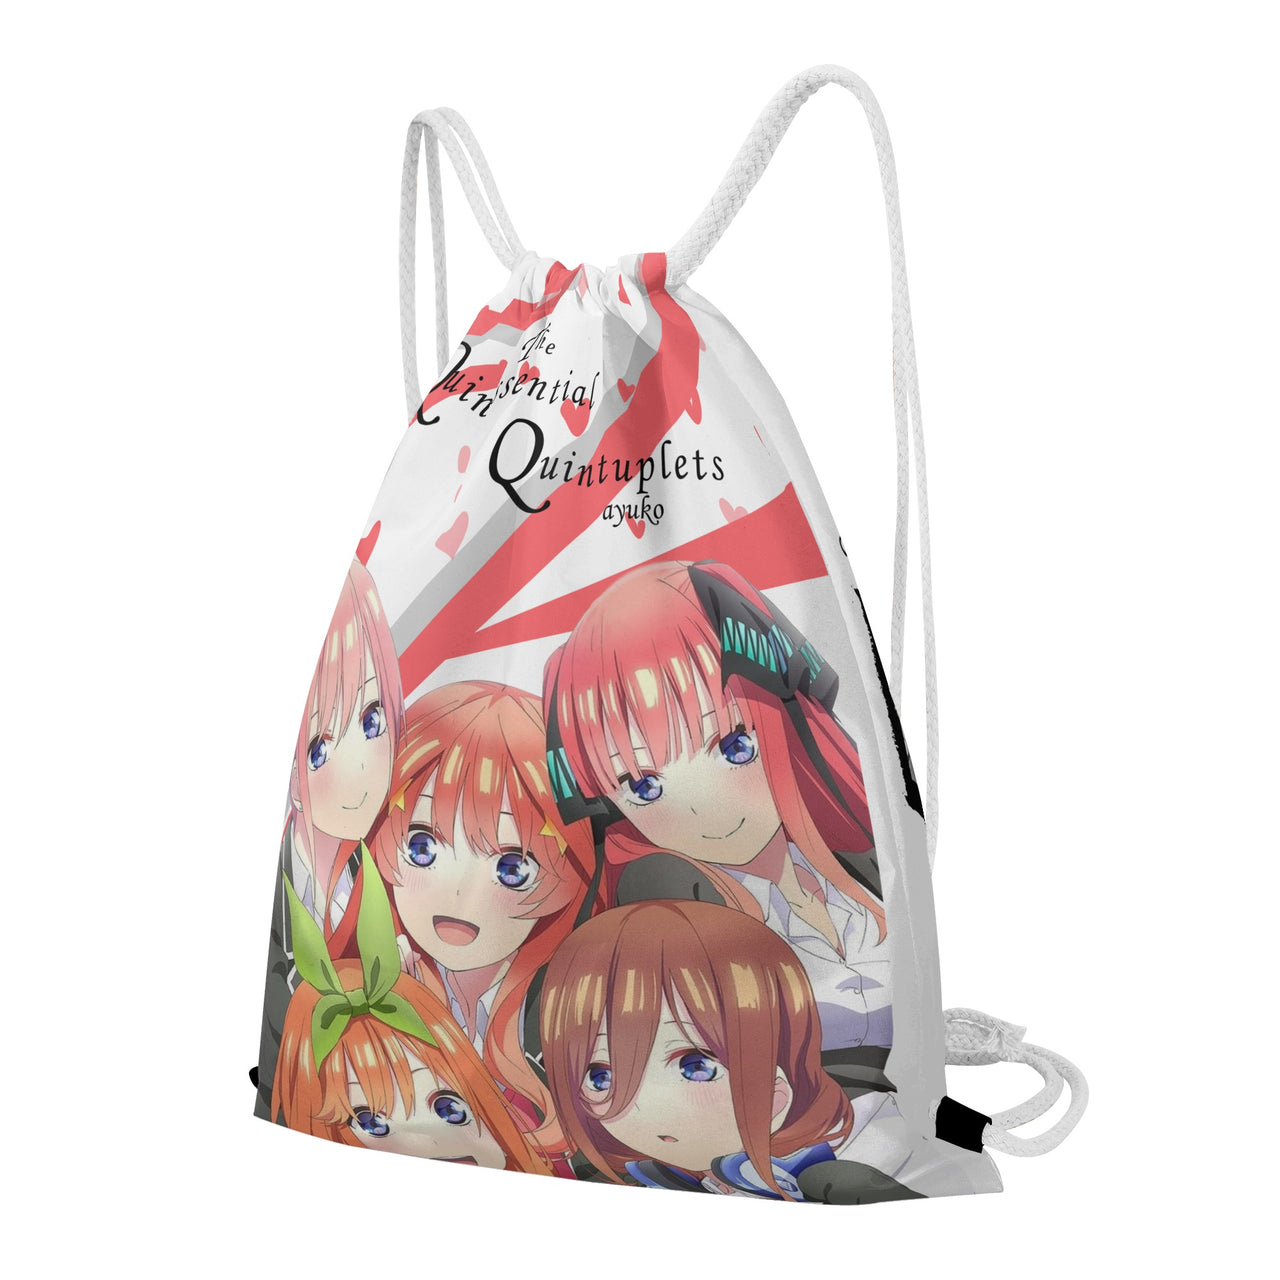 The Quintessential Quintuplets Anime Drawstring Bag